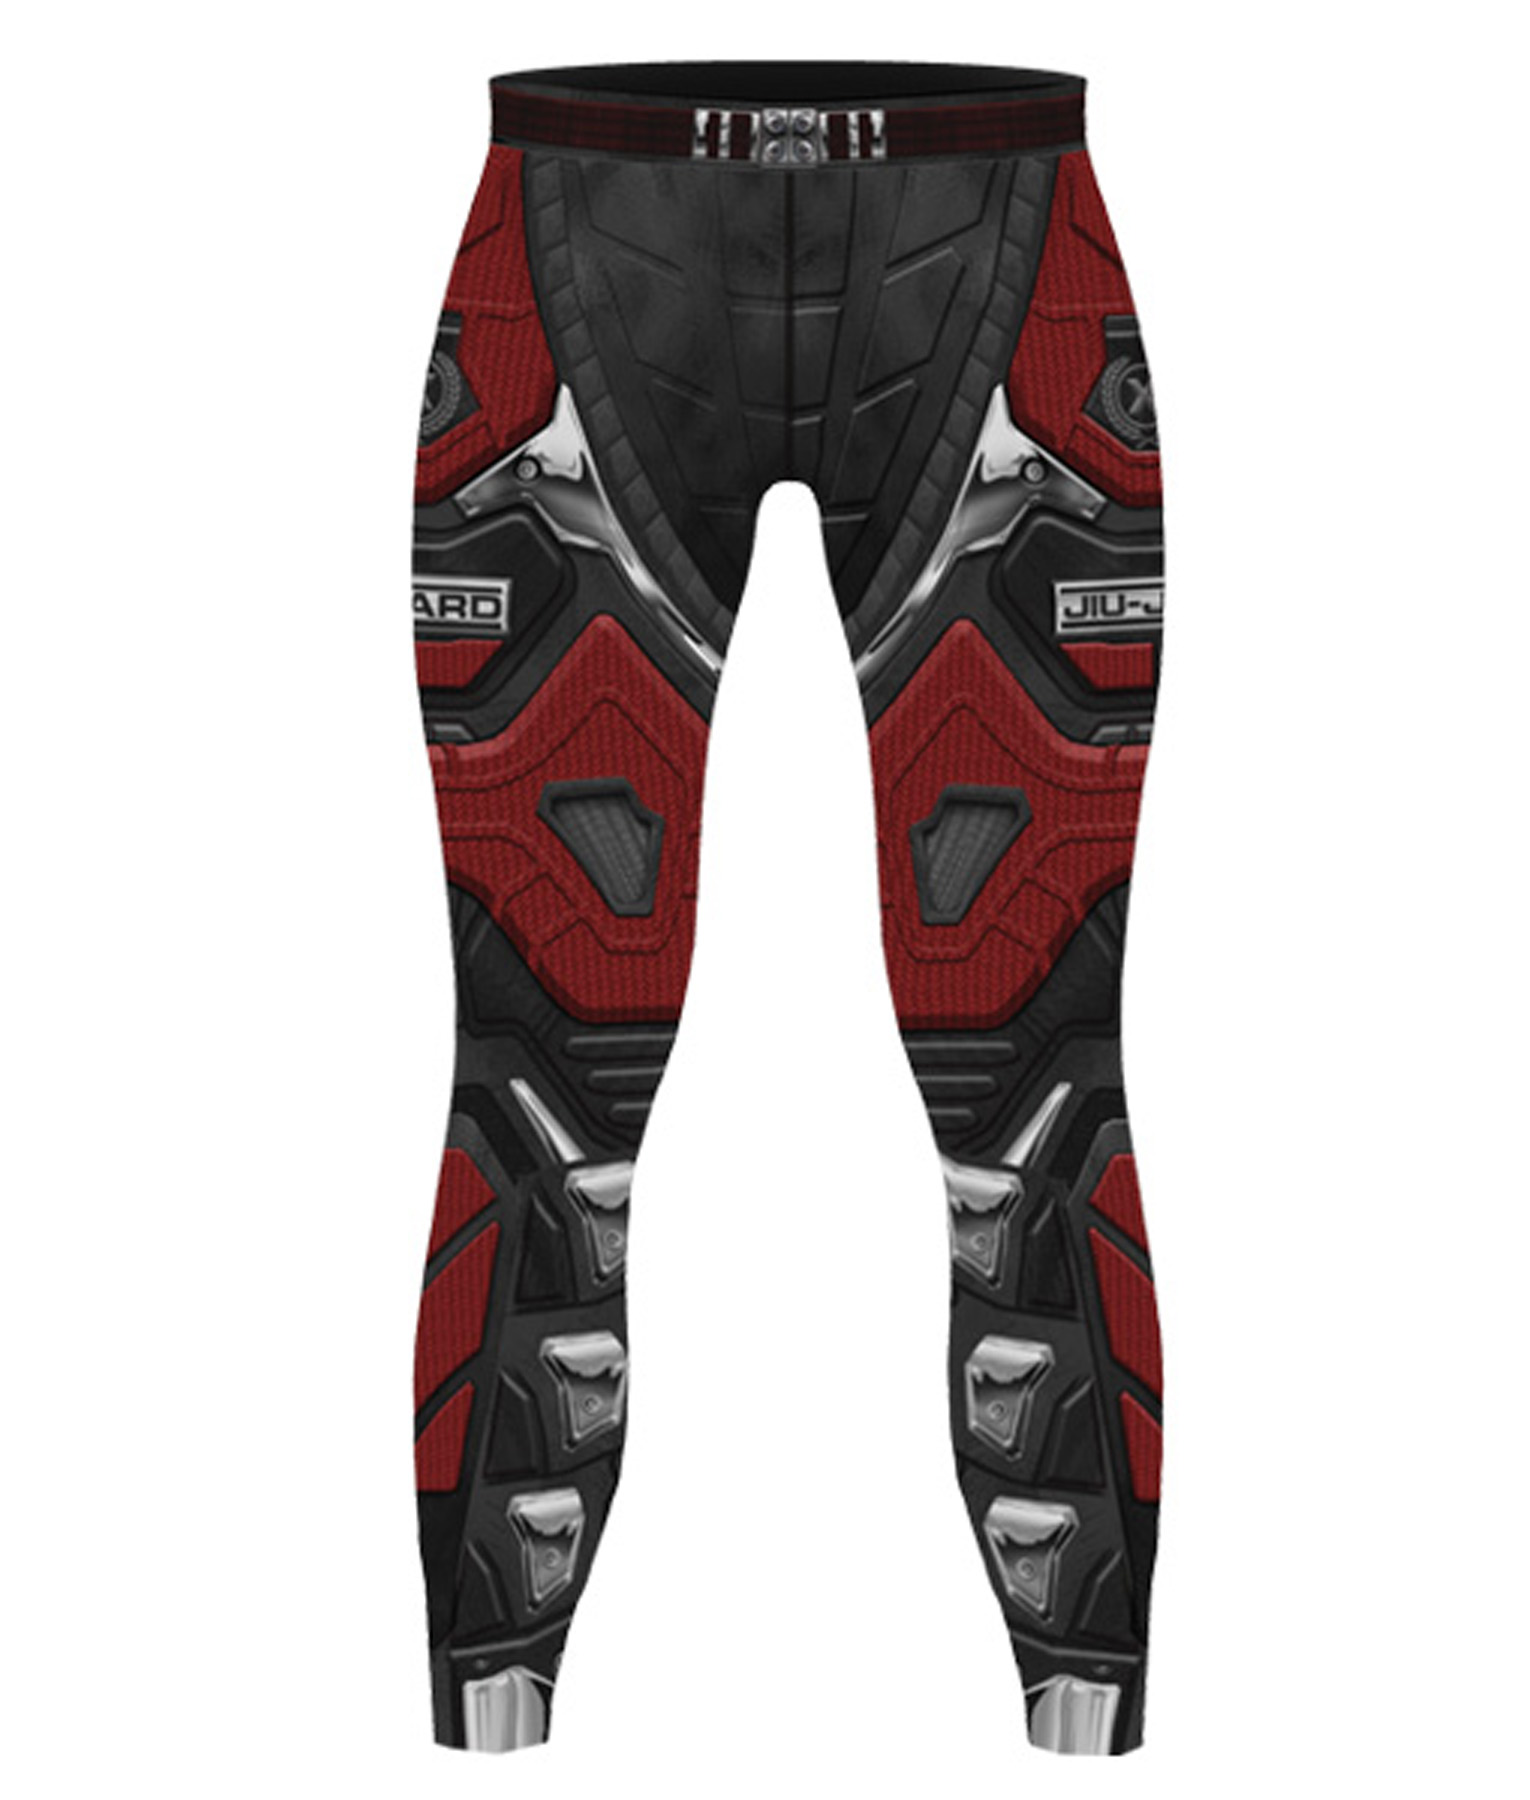 Harley Compression Pants – X-Guard Brand: Brazilian Jiu Jitsu Fight Wear